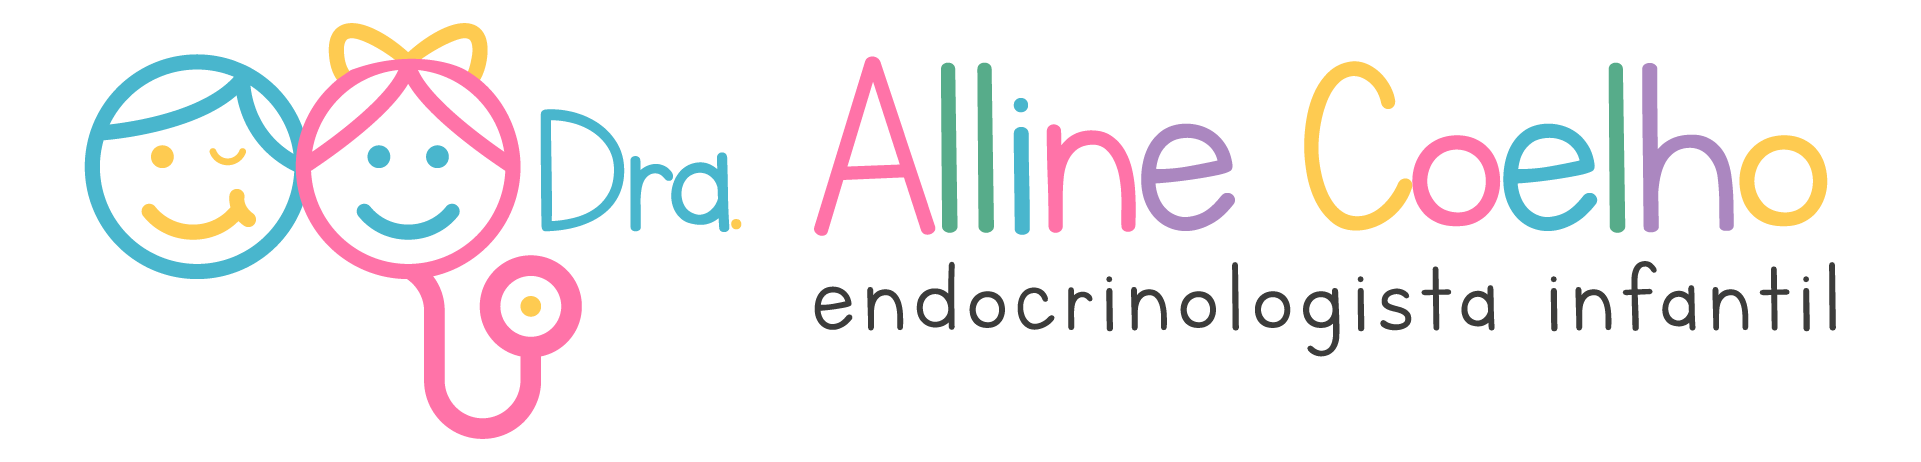 Alline Coelho - Endocrinologista Infantil